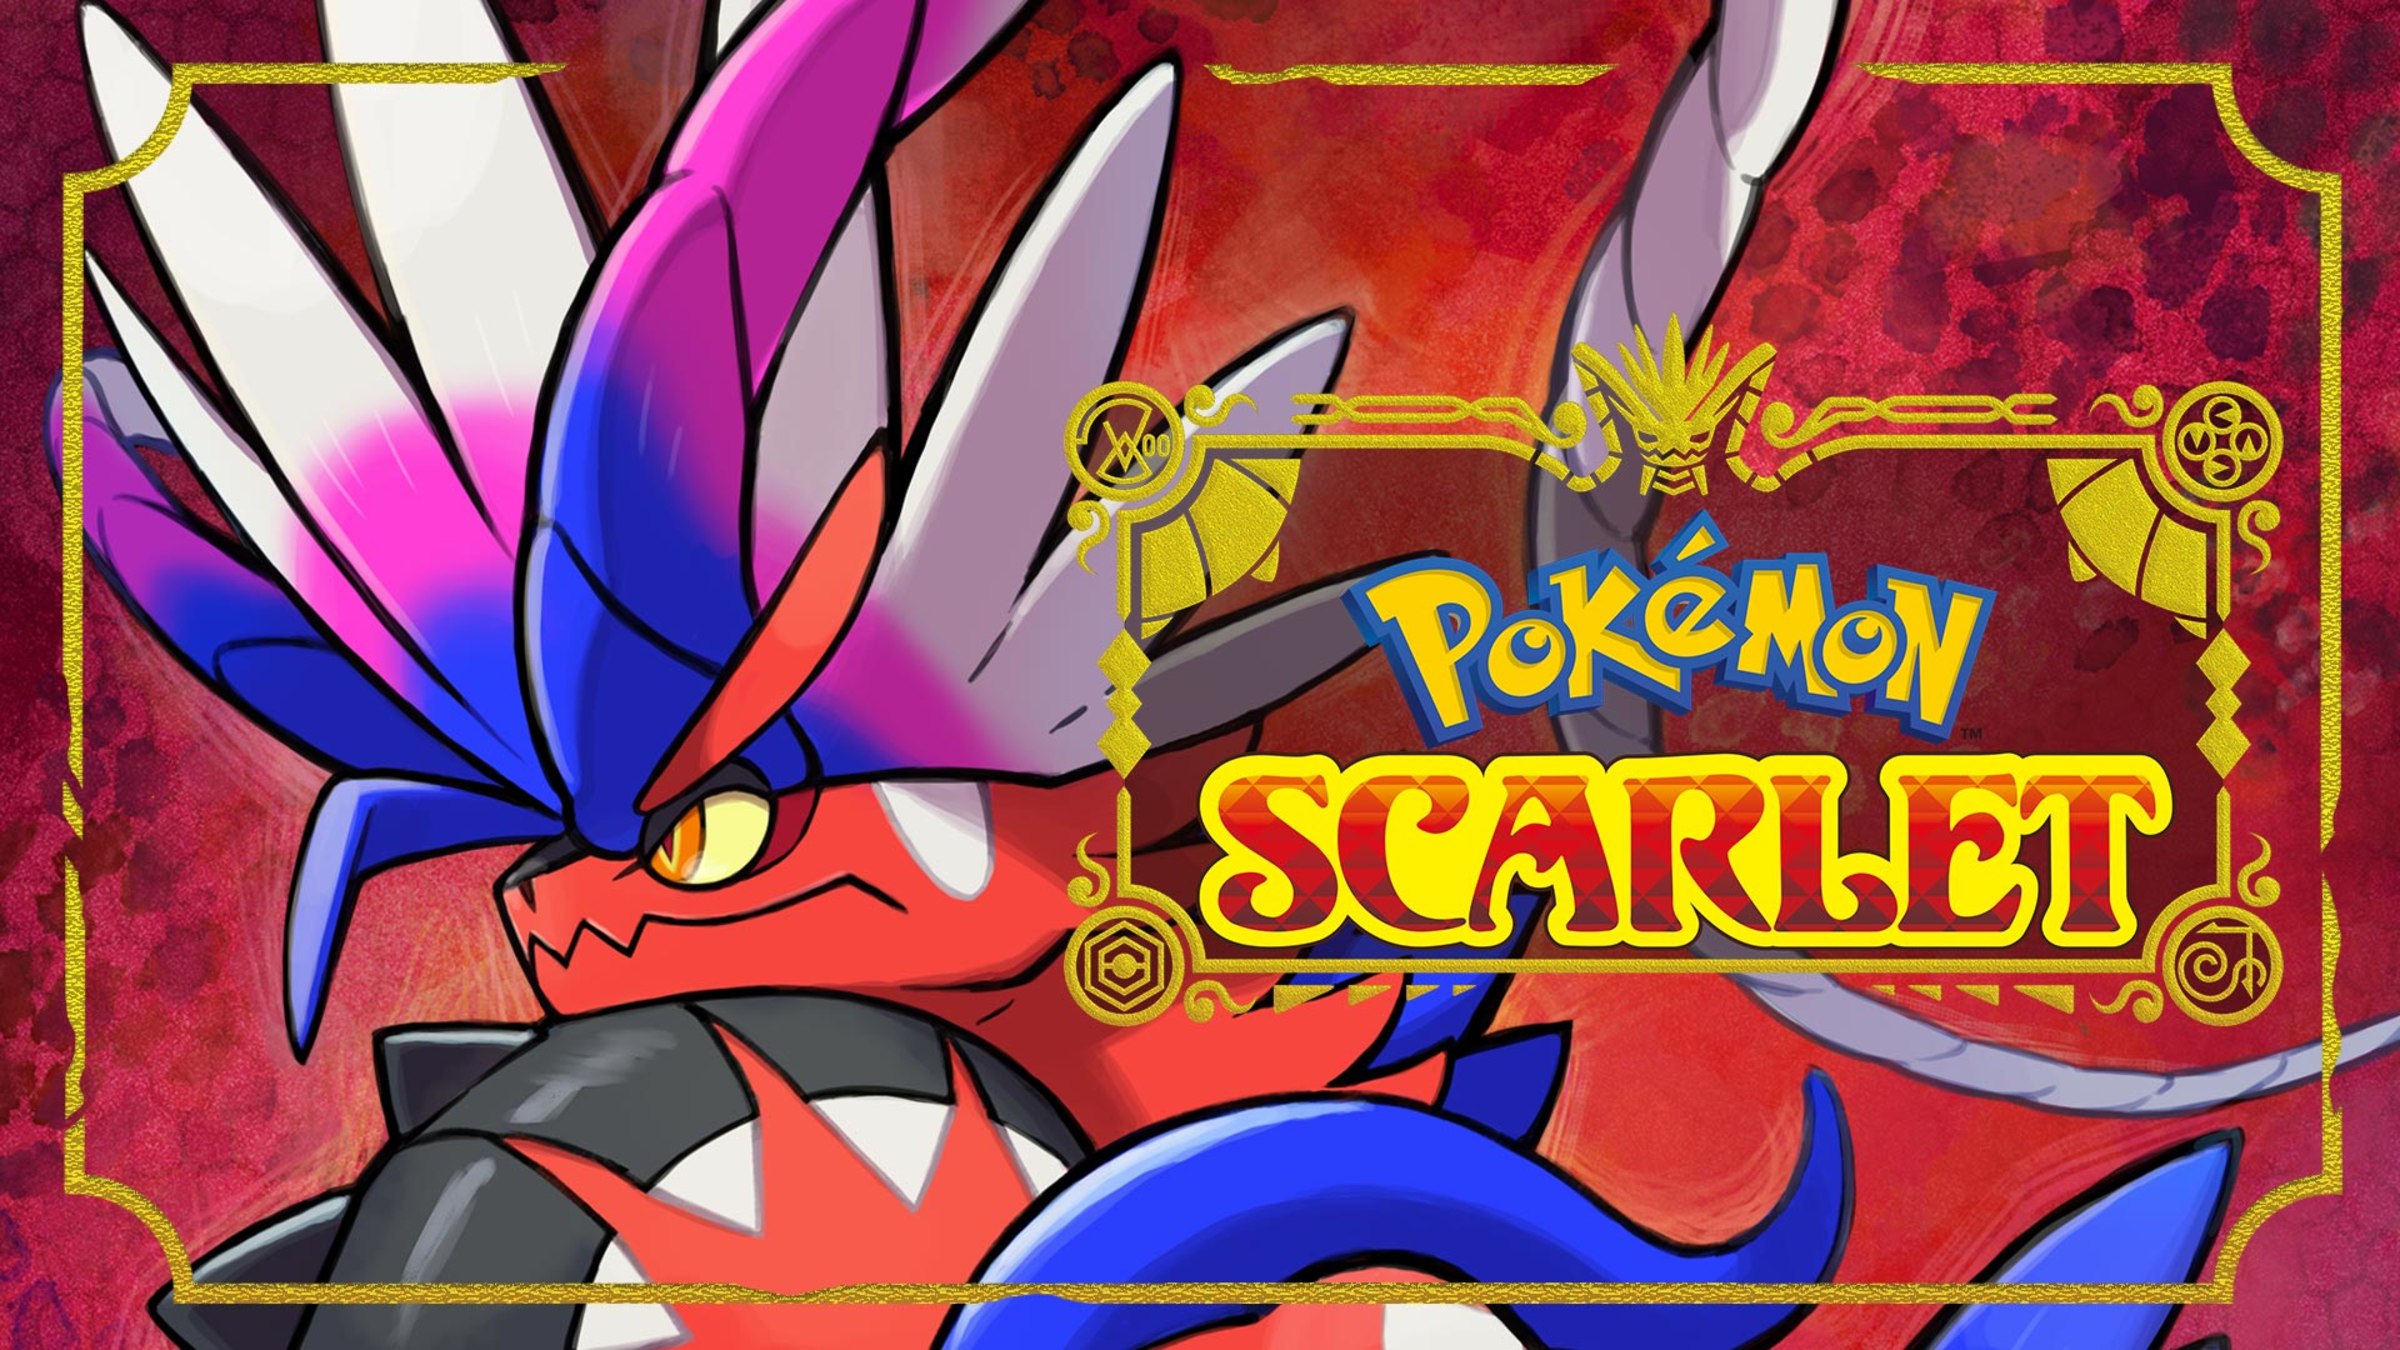 pokemon scarlet nsp download